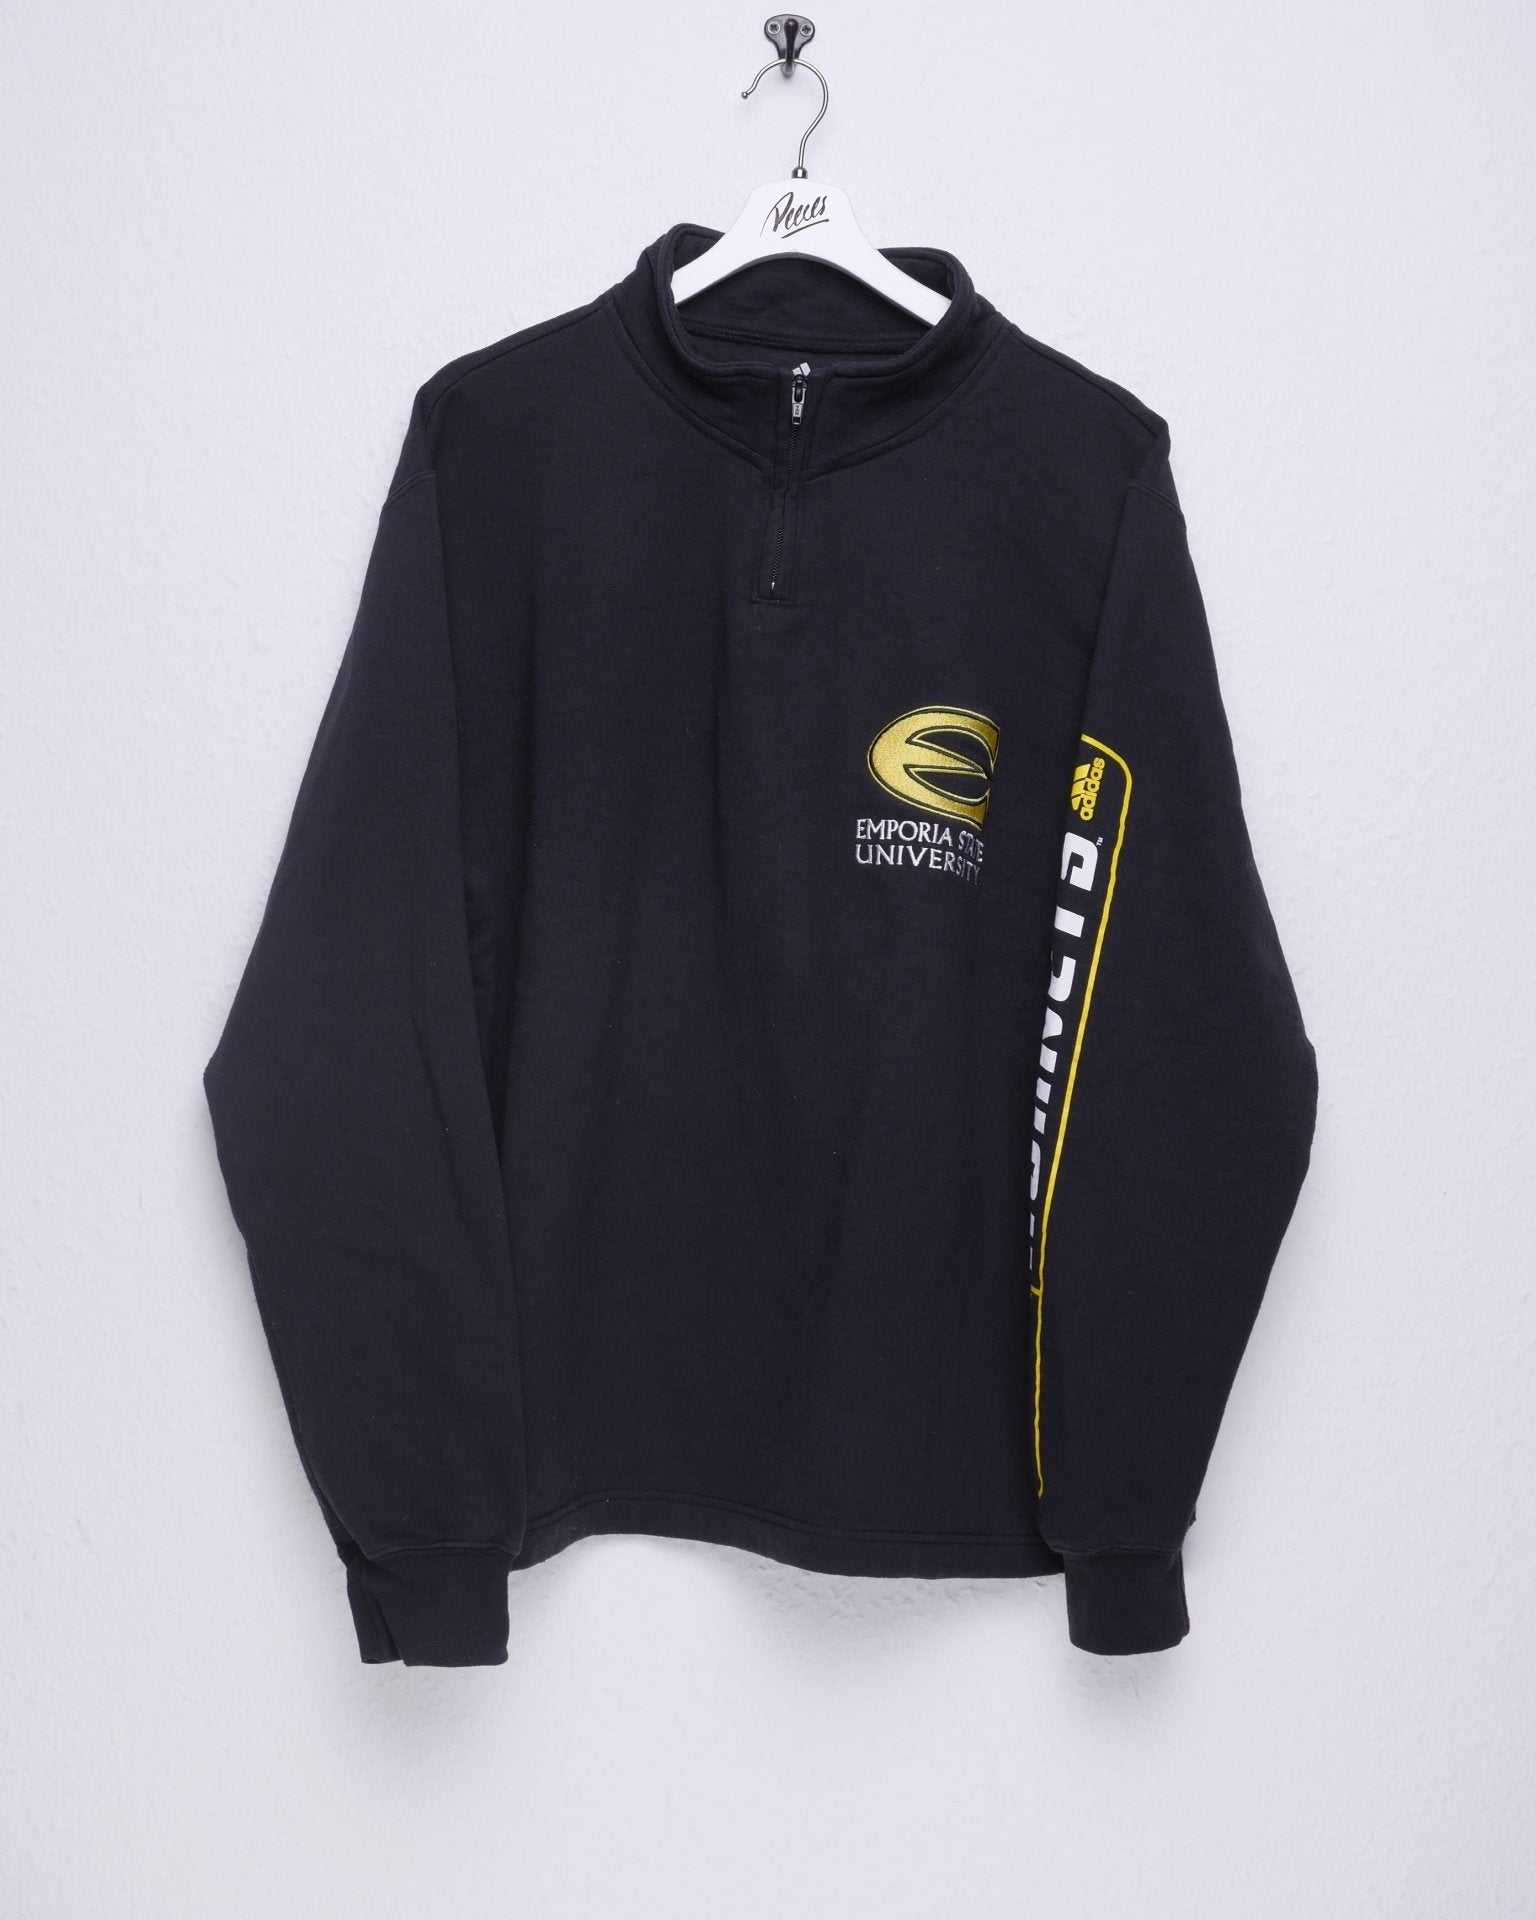 Adidas Emporia State University printed Logo black Half Zip Sweater - Peeces